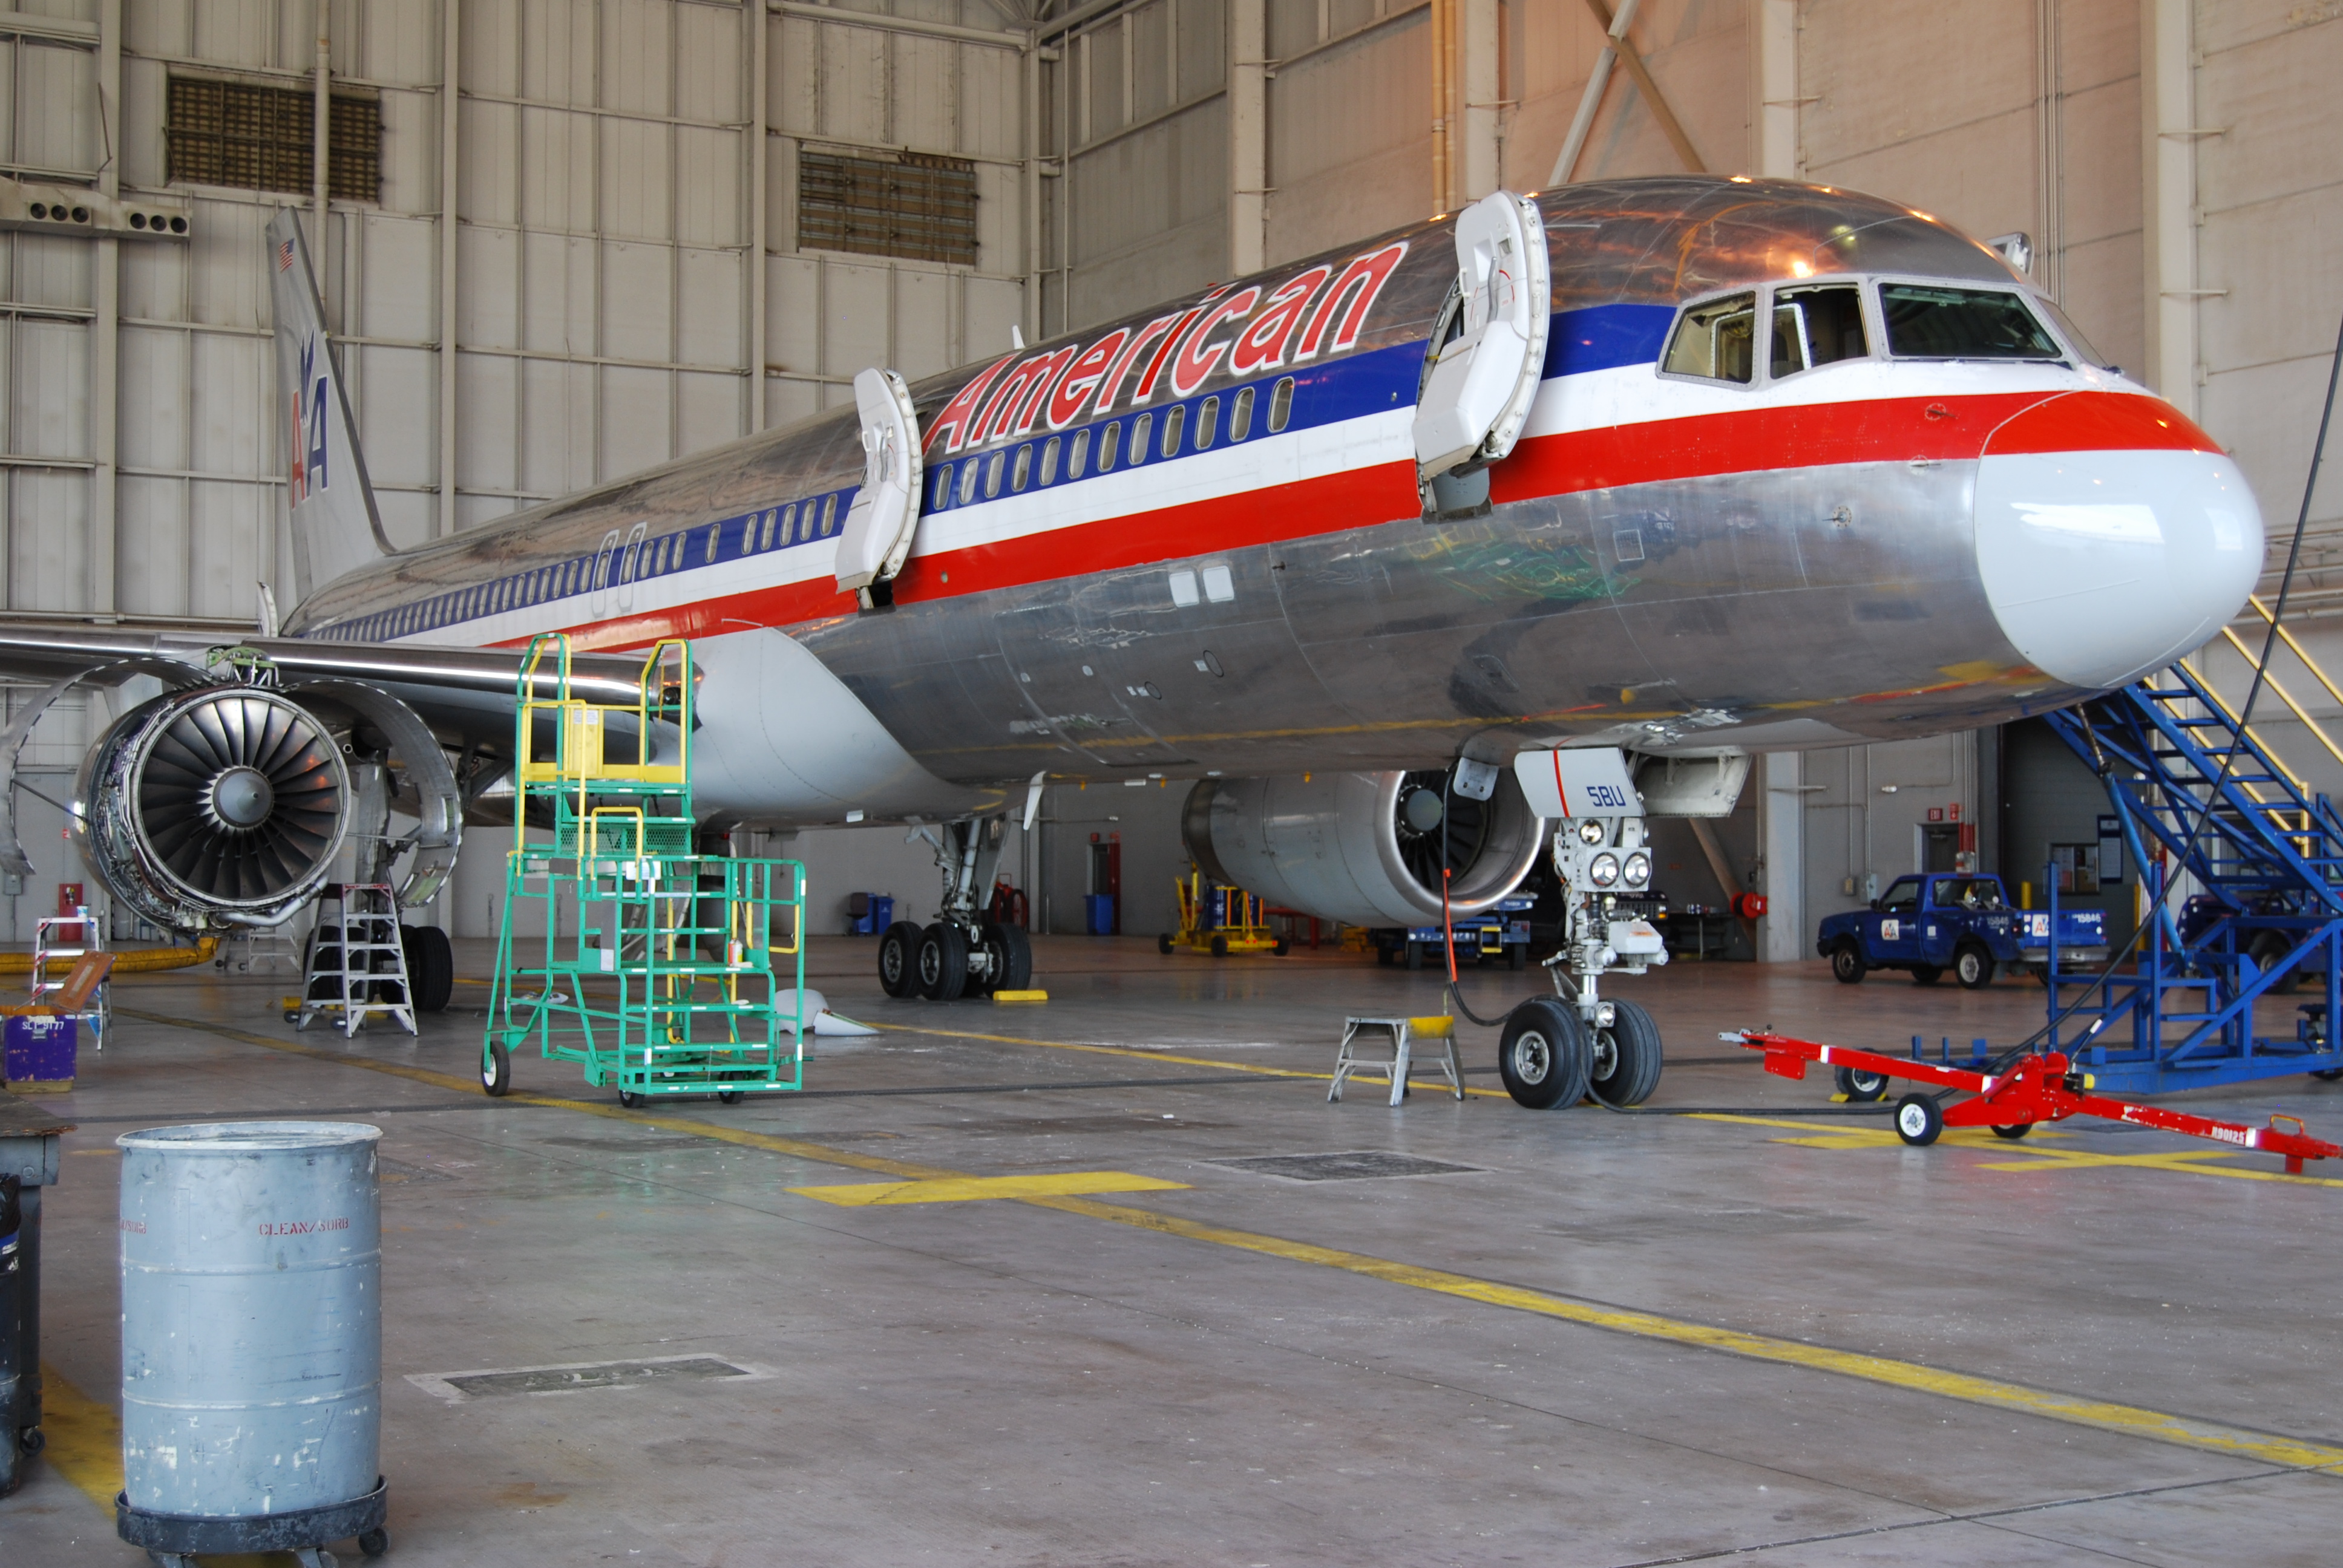 American Airlines B757-200 forward fuselage, service and emergency doors open